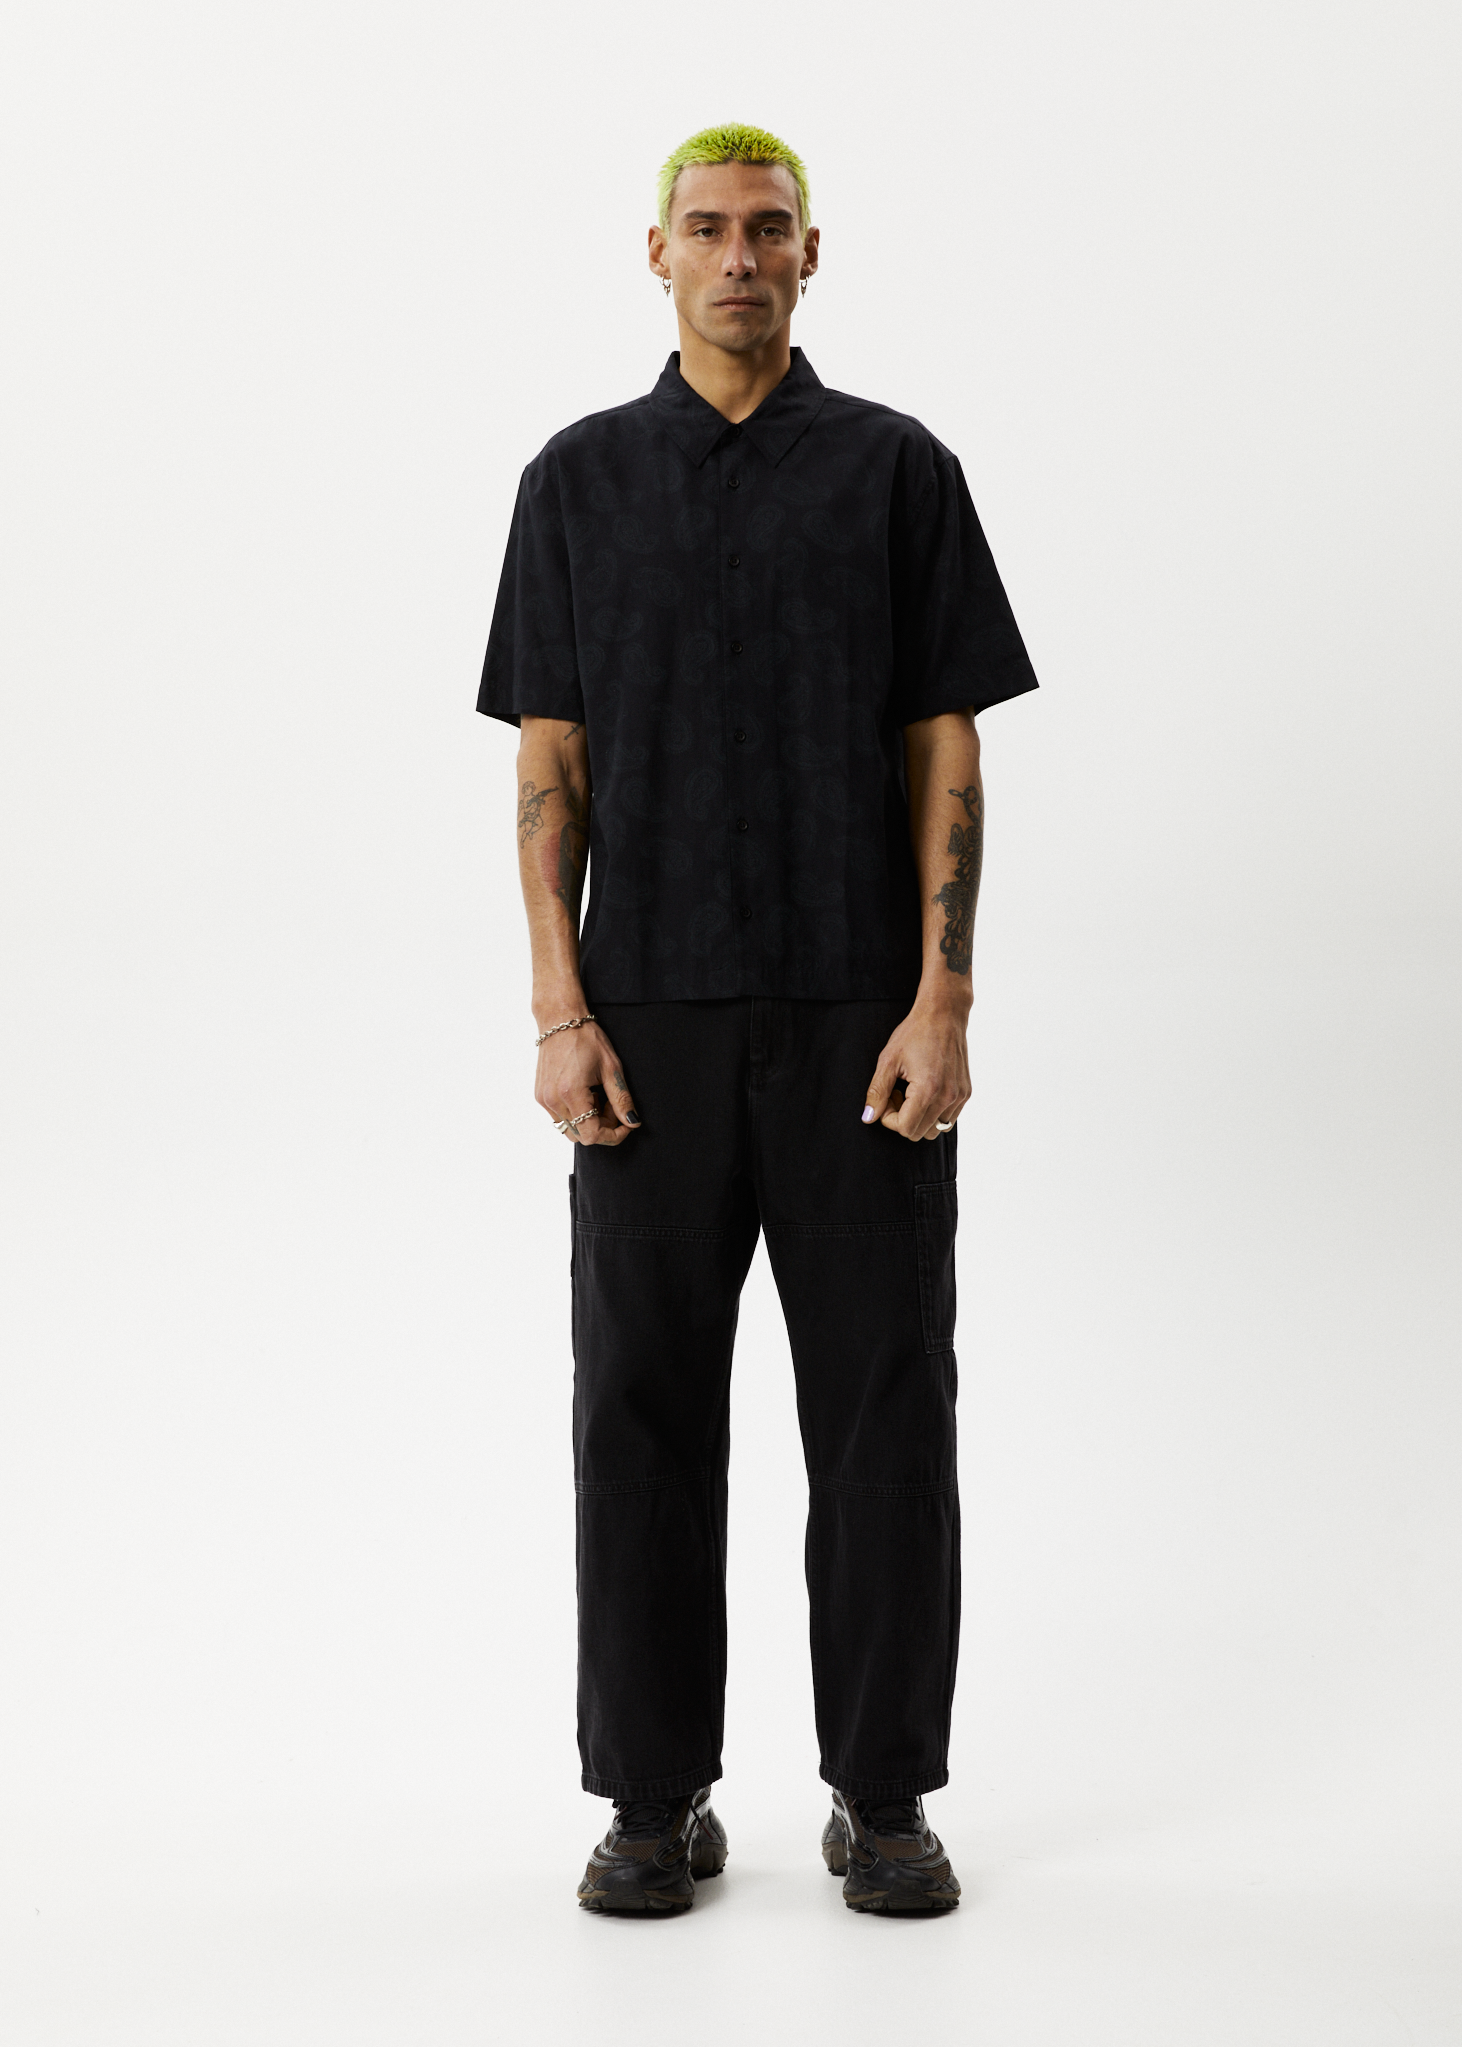 T-Shirt Men's Paisley Fashion Short Sleeve Black Casual Vintage Soft T Shirt